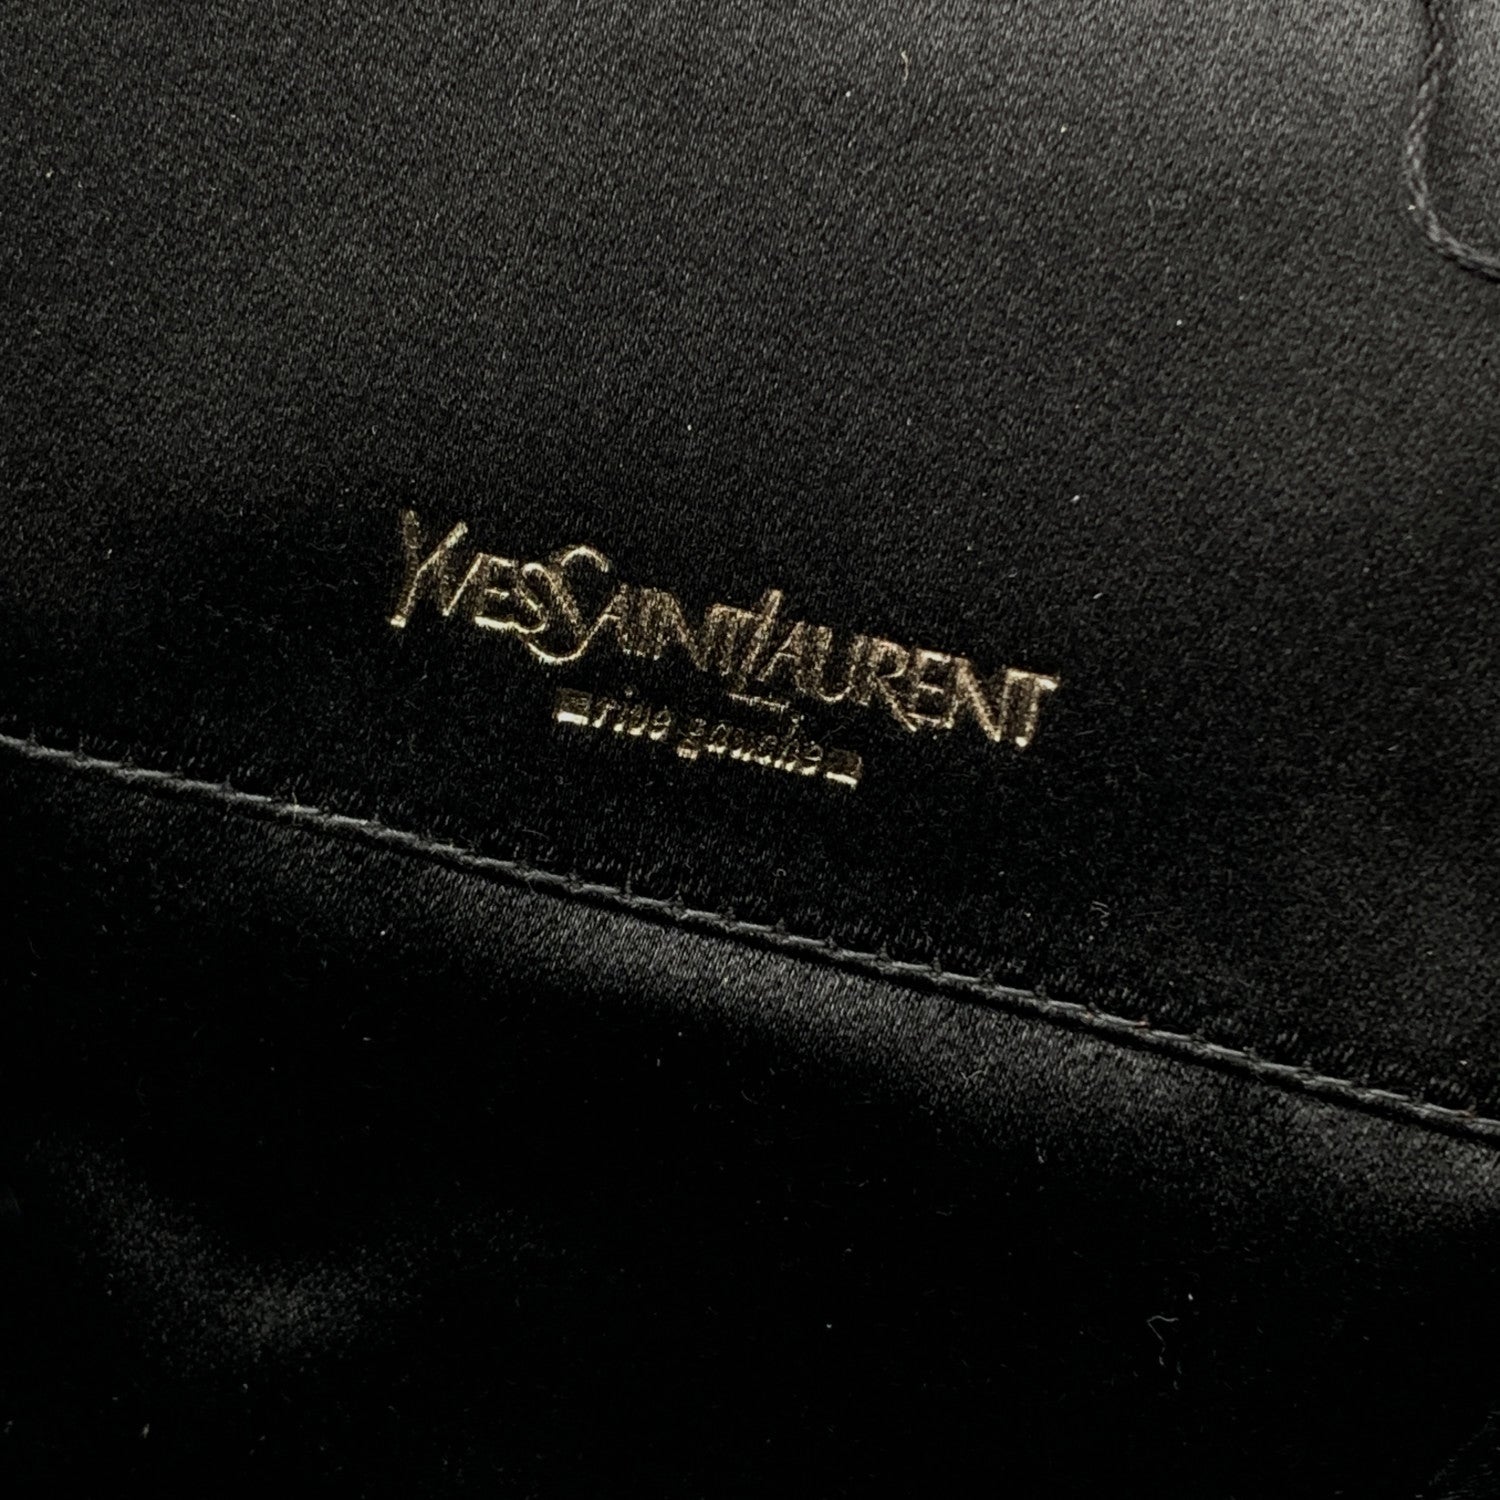 YVES SAINT LAURENT Handbags